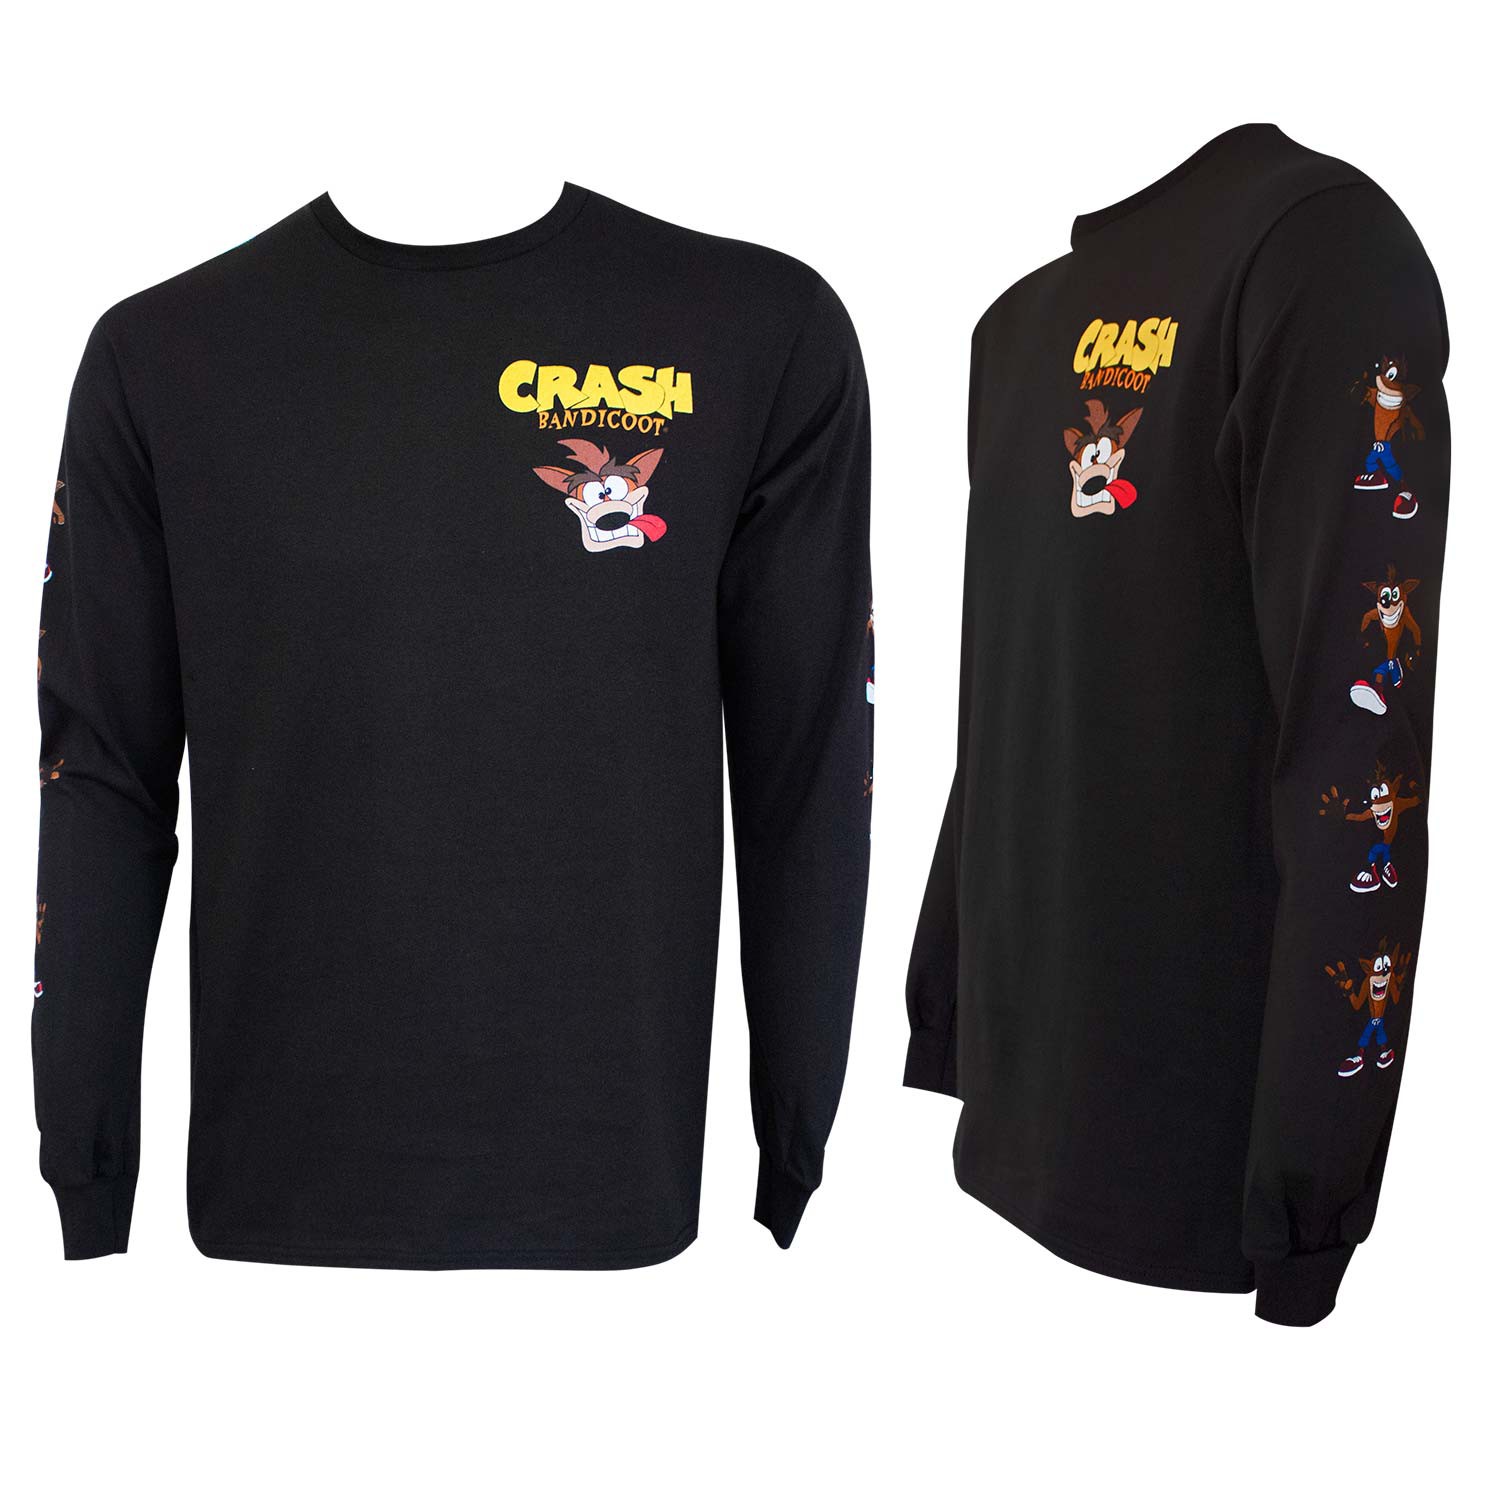 Crash Bandicoot Long Sleeve Black Tee Shirt